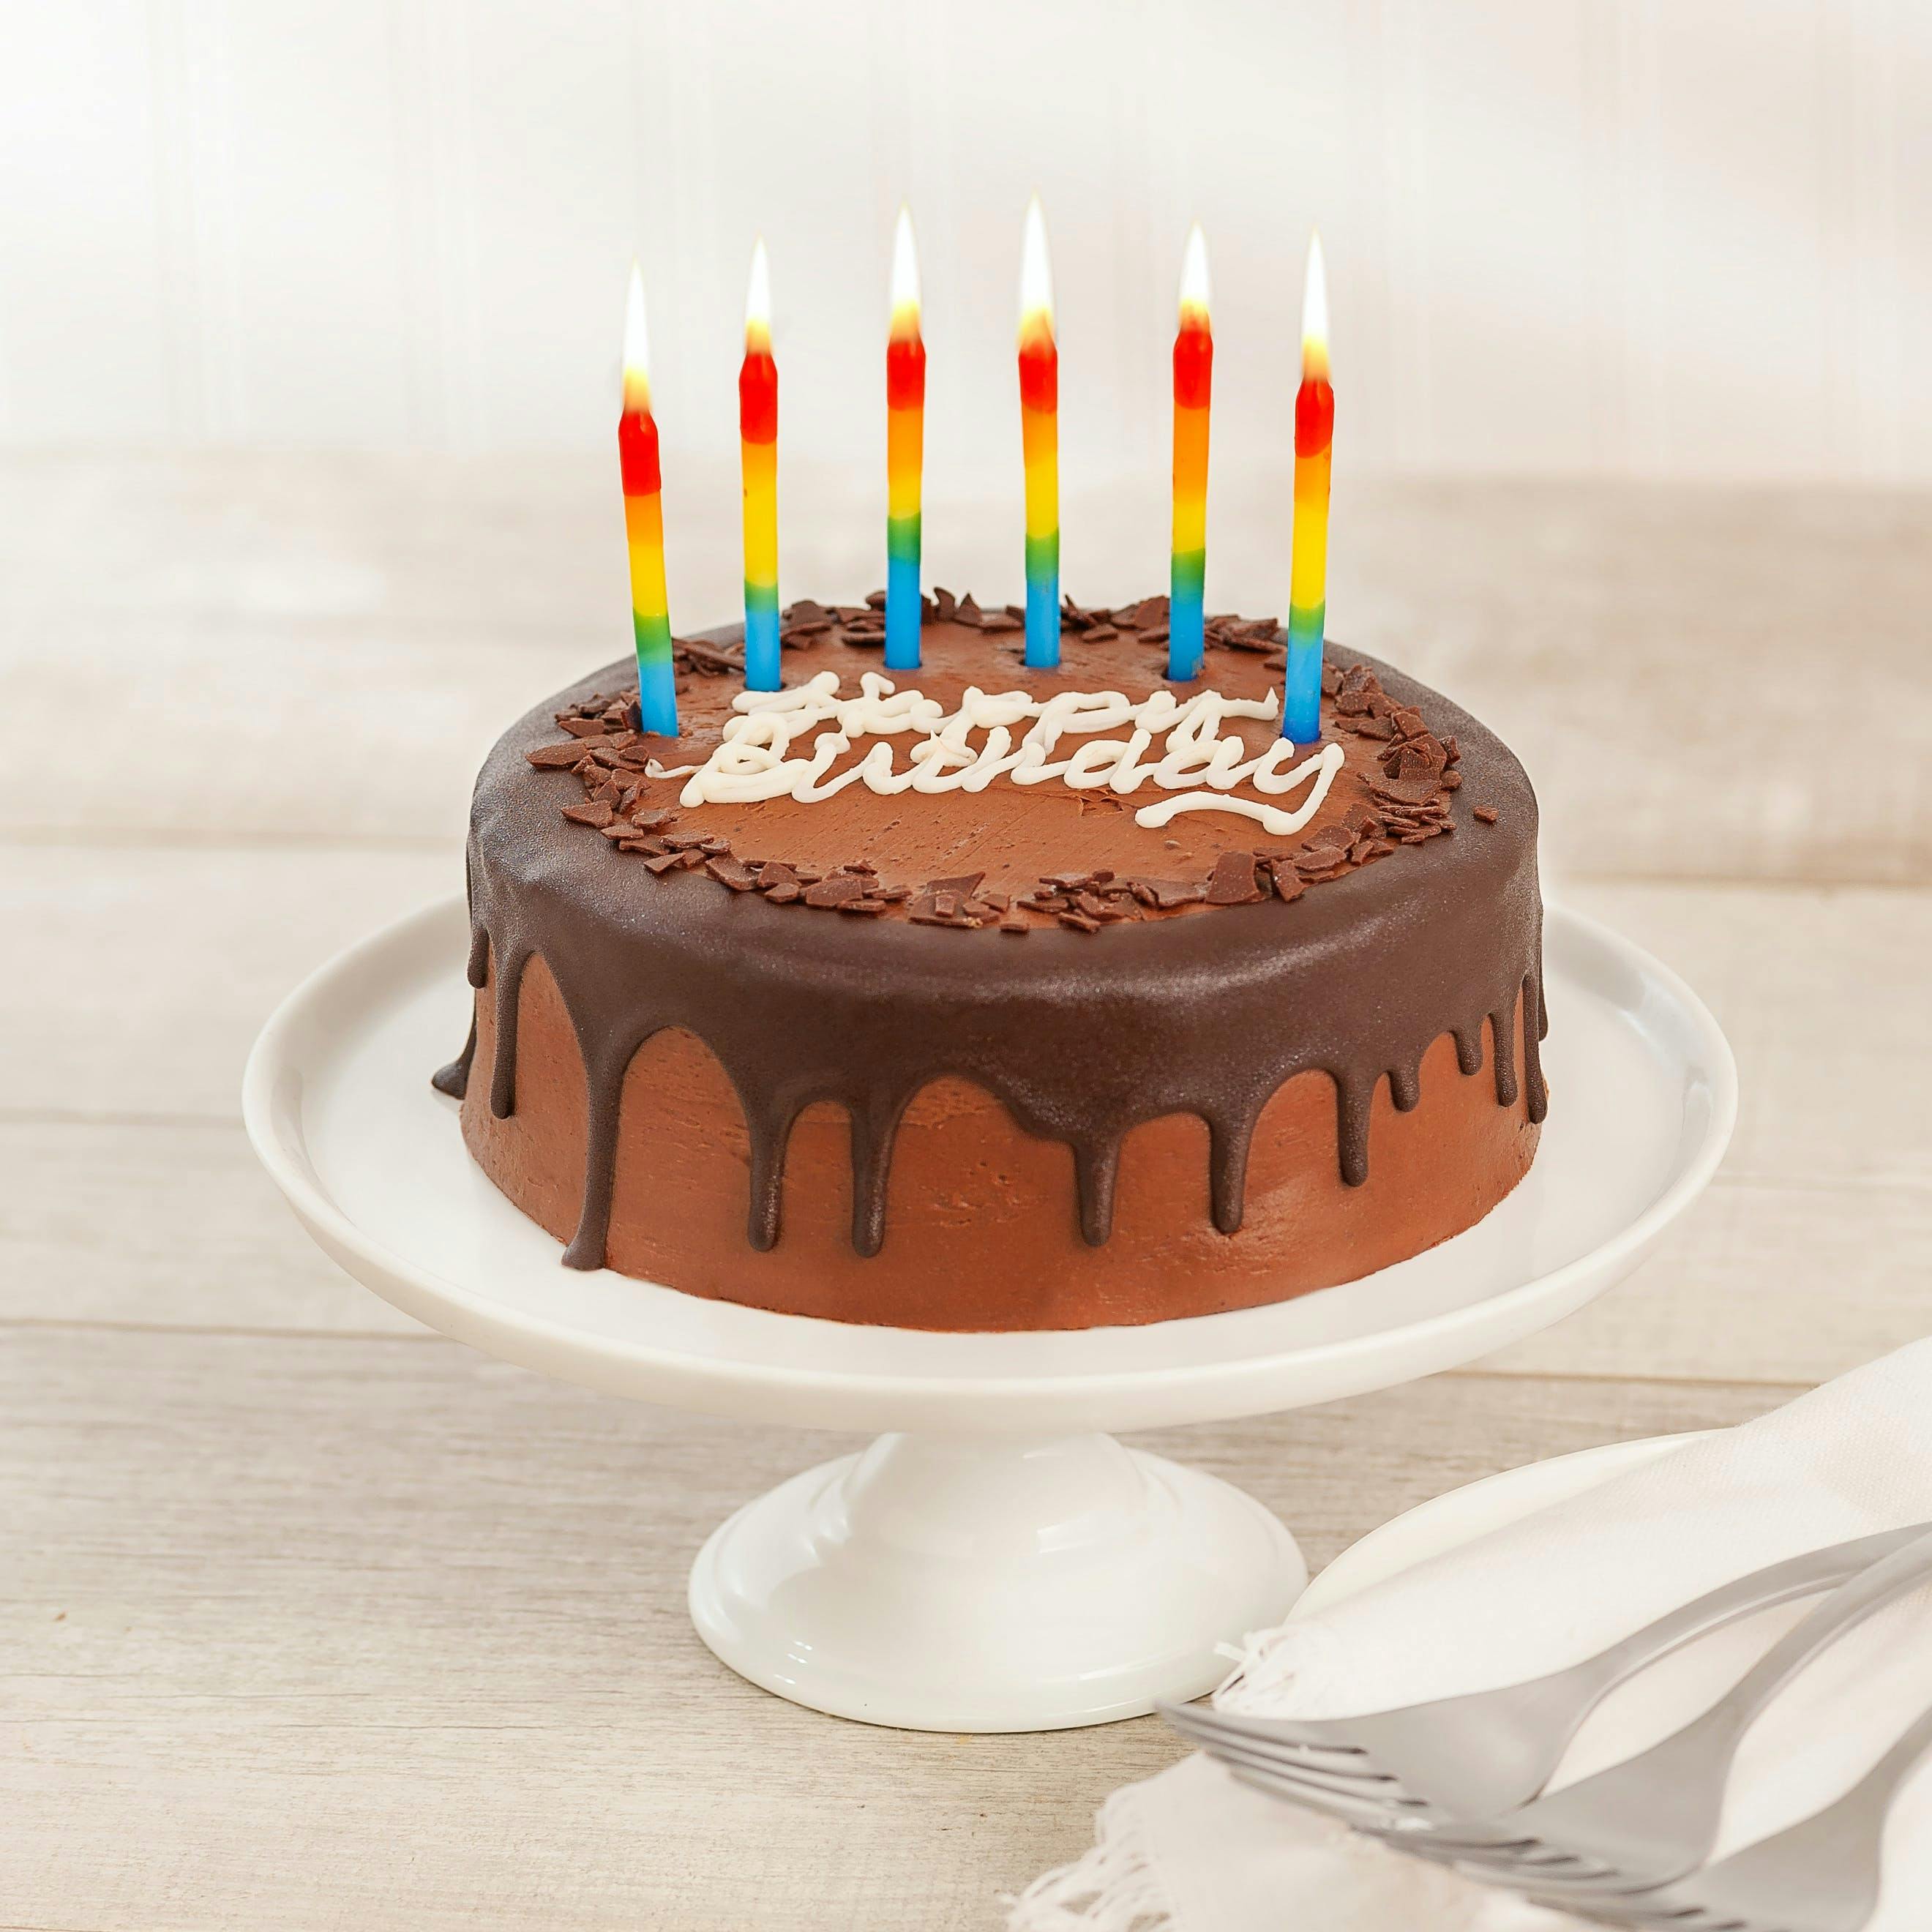 Buy Premium 2 Tier Fondant Cake Online | 2 Tier Fondant Cake